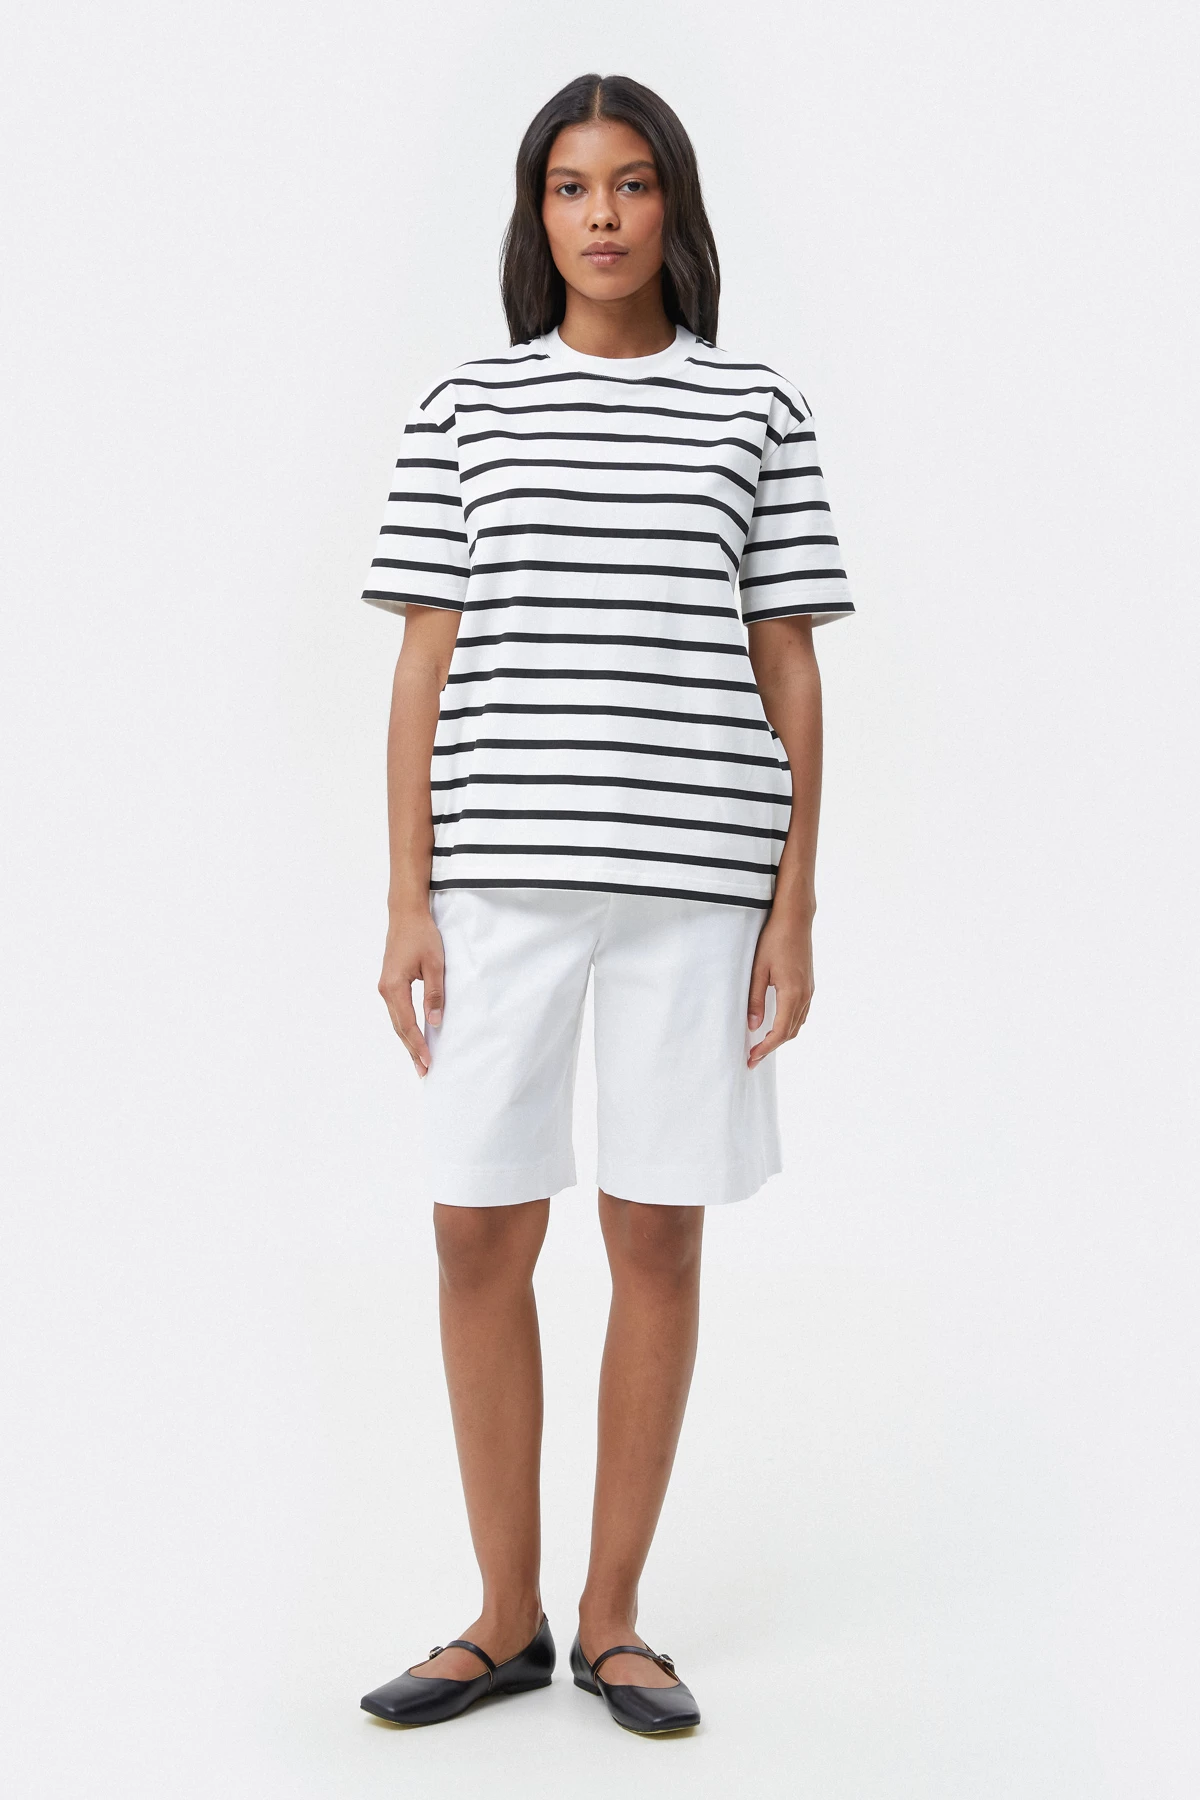 Cotton T-shirt with black stripes, photo 2